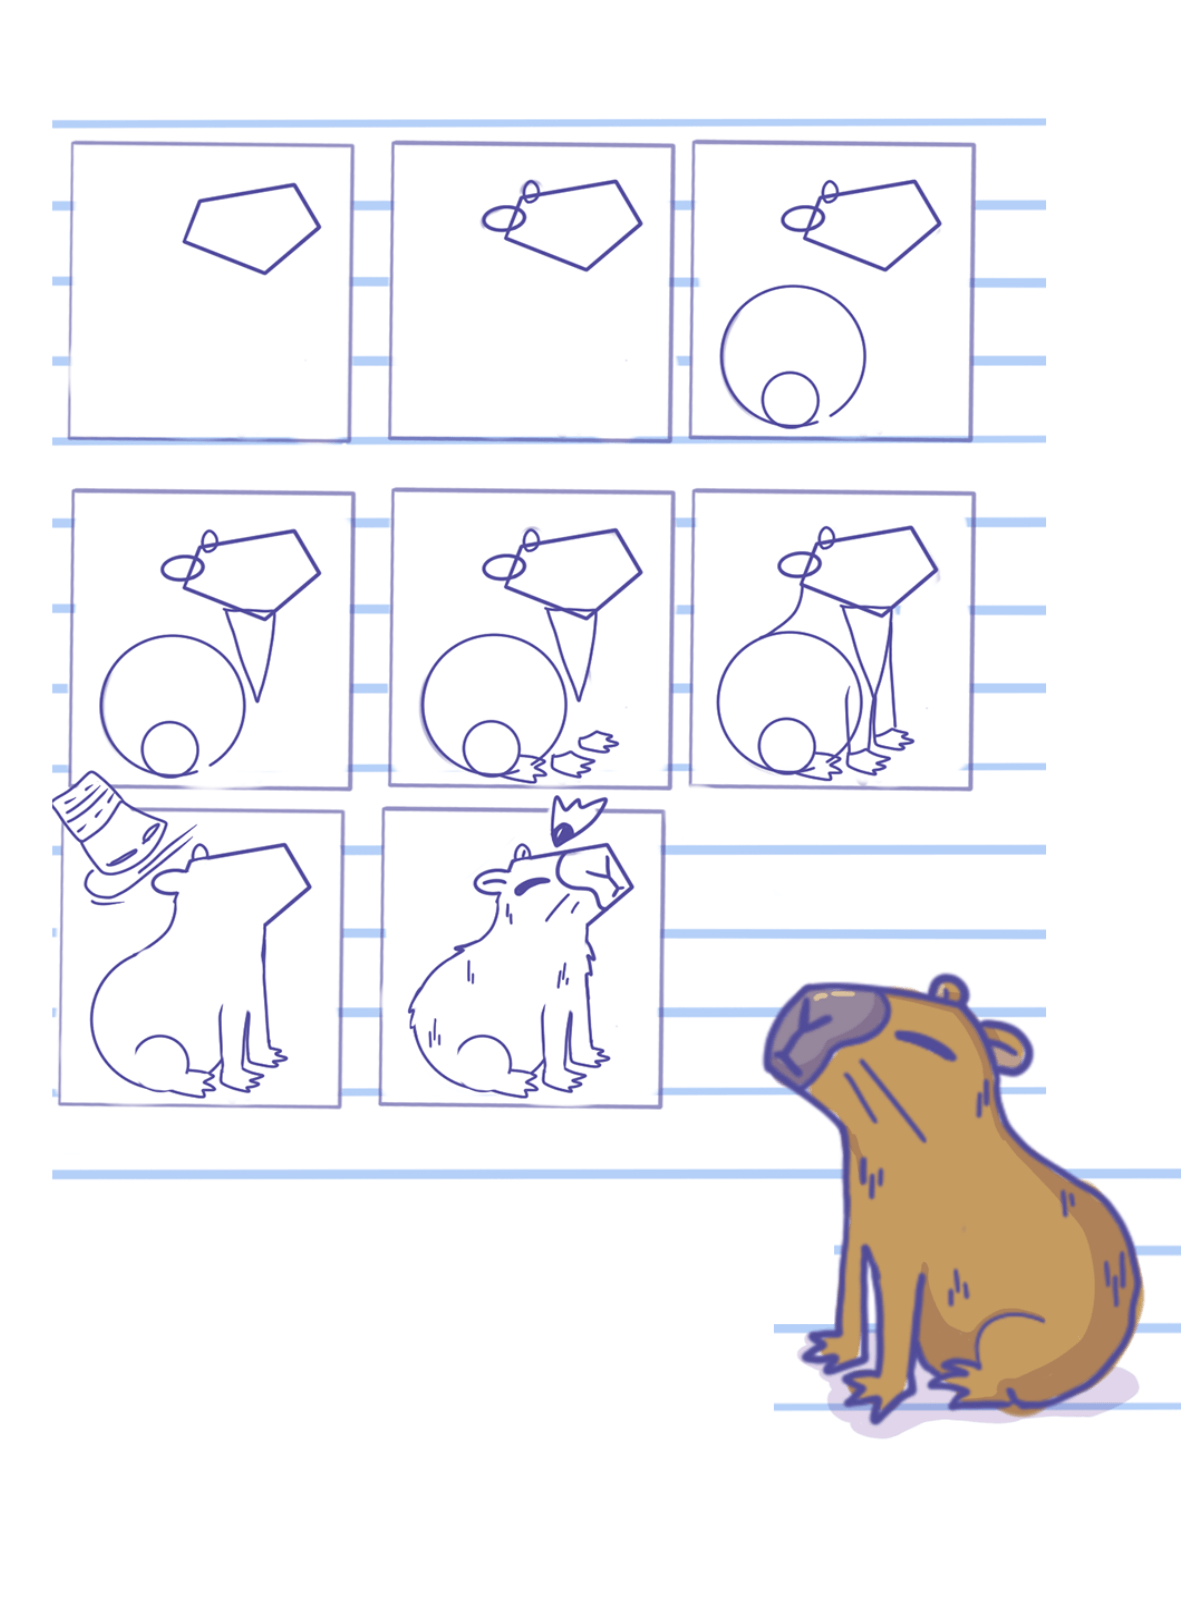 Capybara drawing simple (2) Drawing Ideas